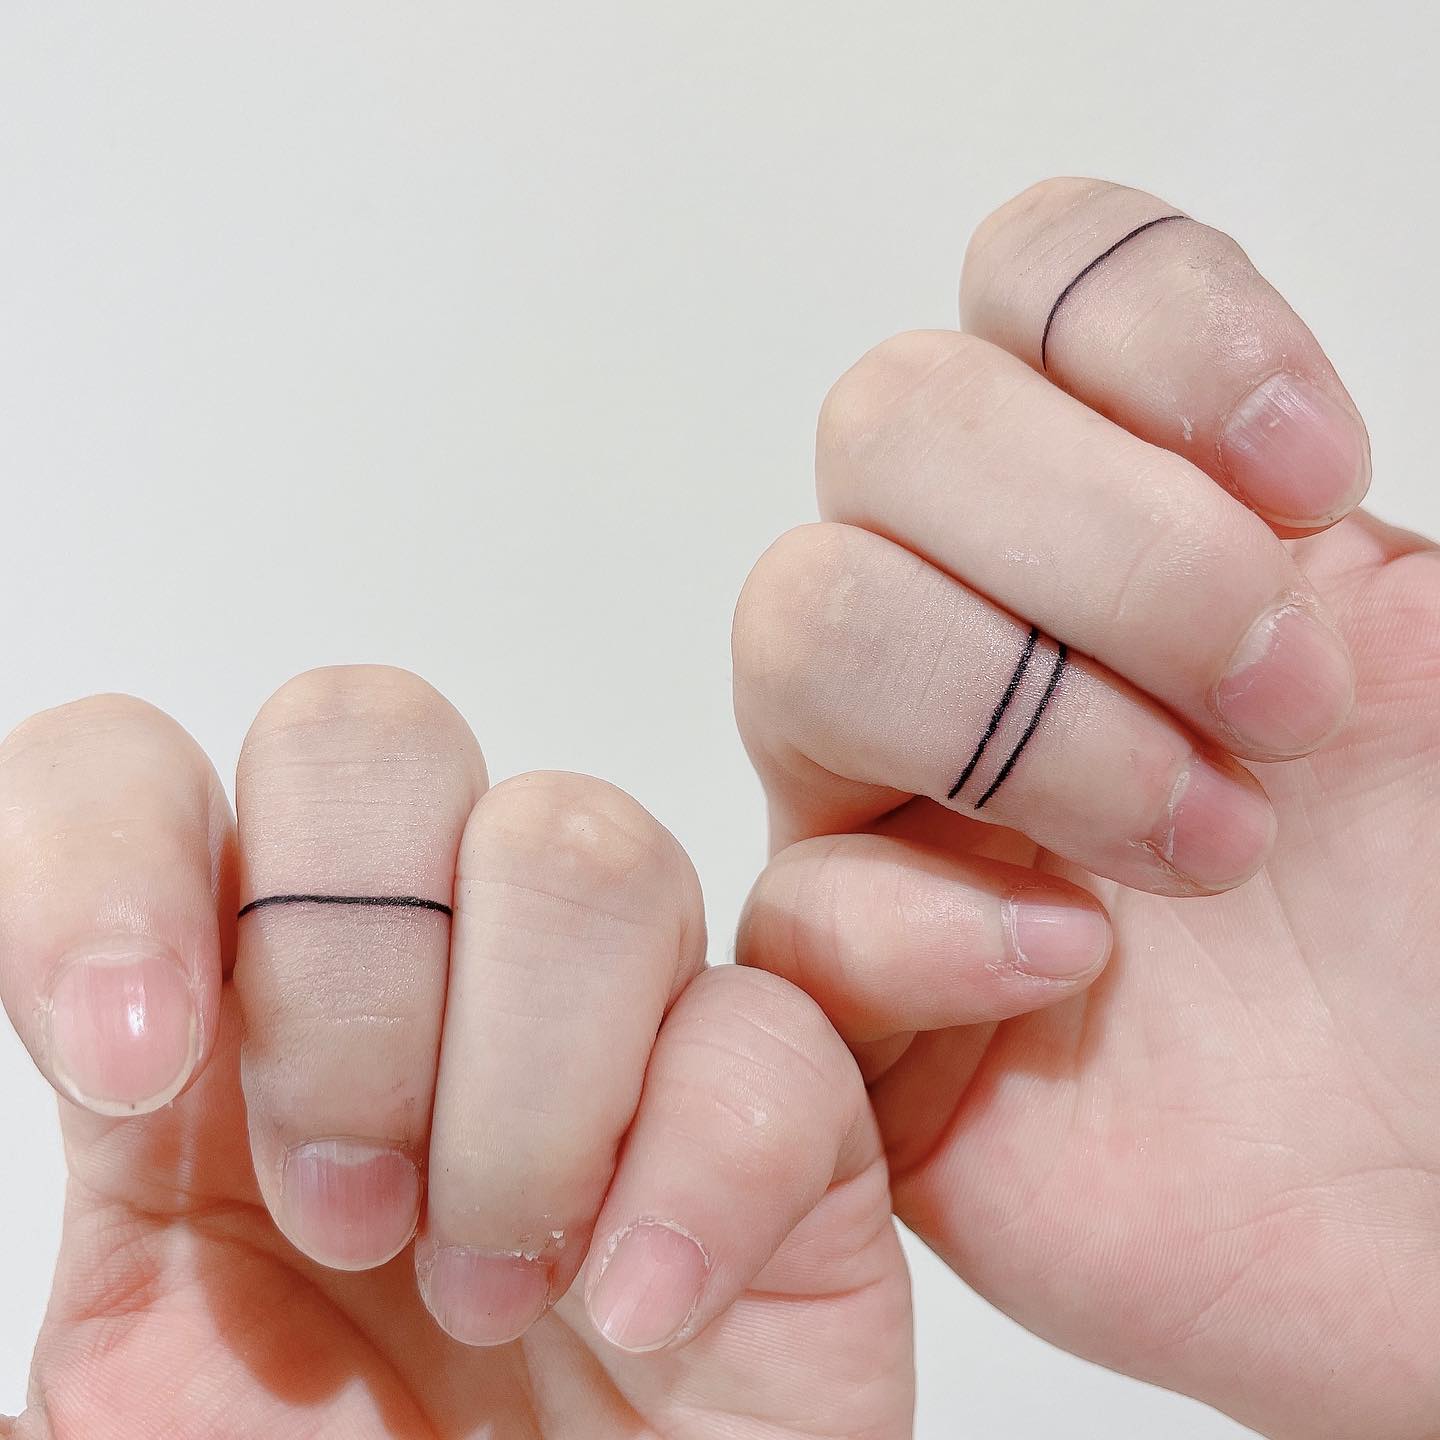 Вместо колец супруги наносят на пальцы татуировки